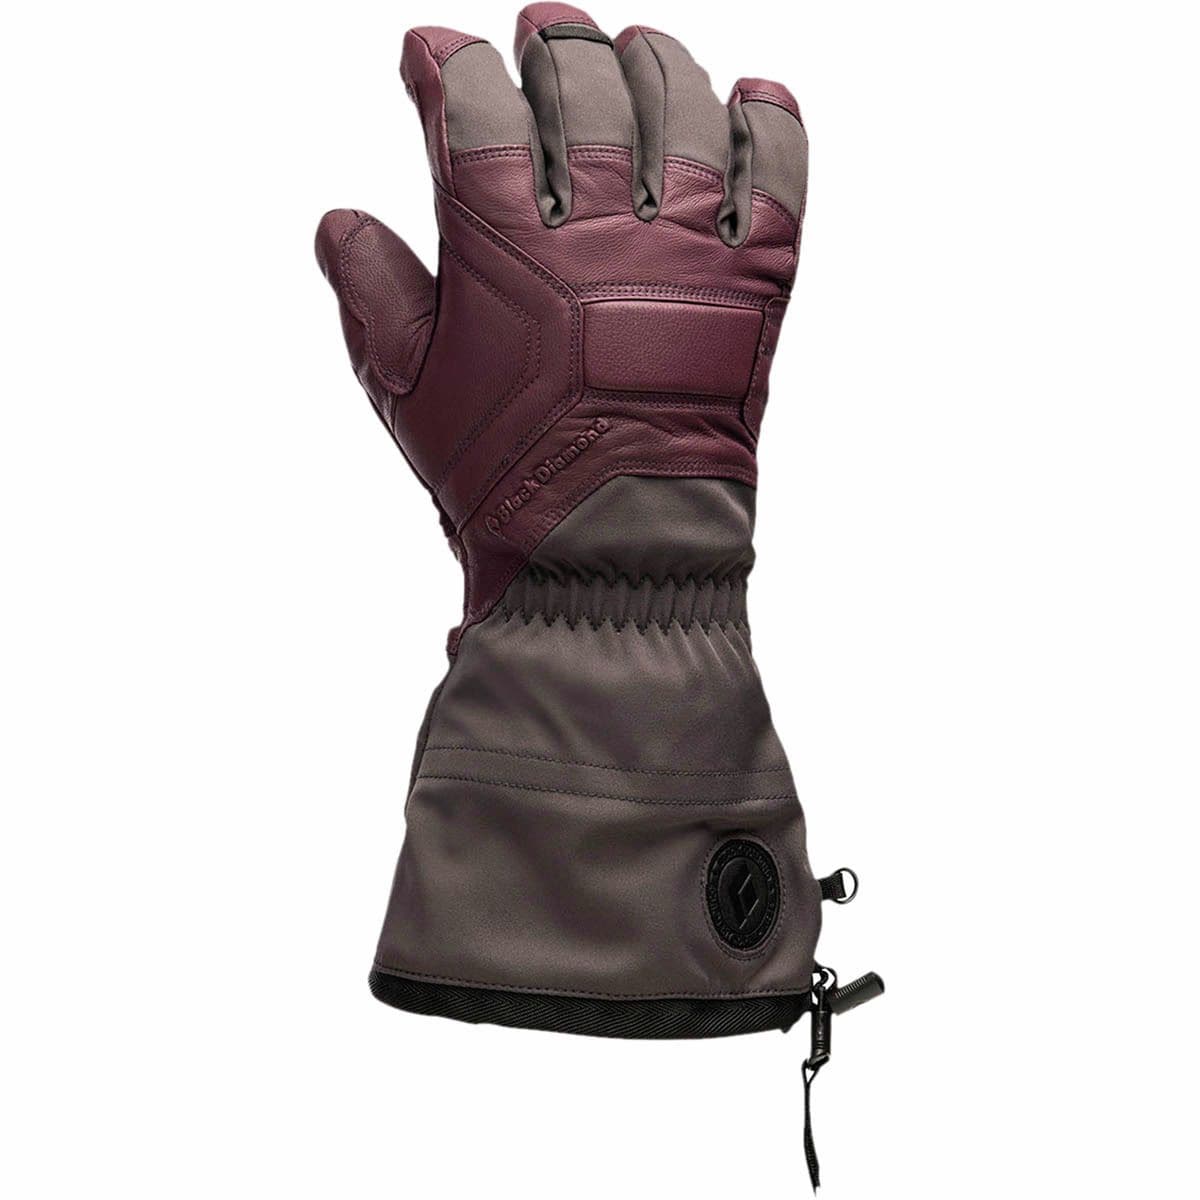 Guide Ski Glove - Women